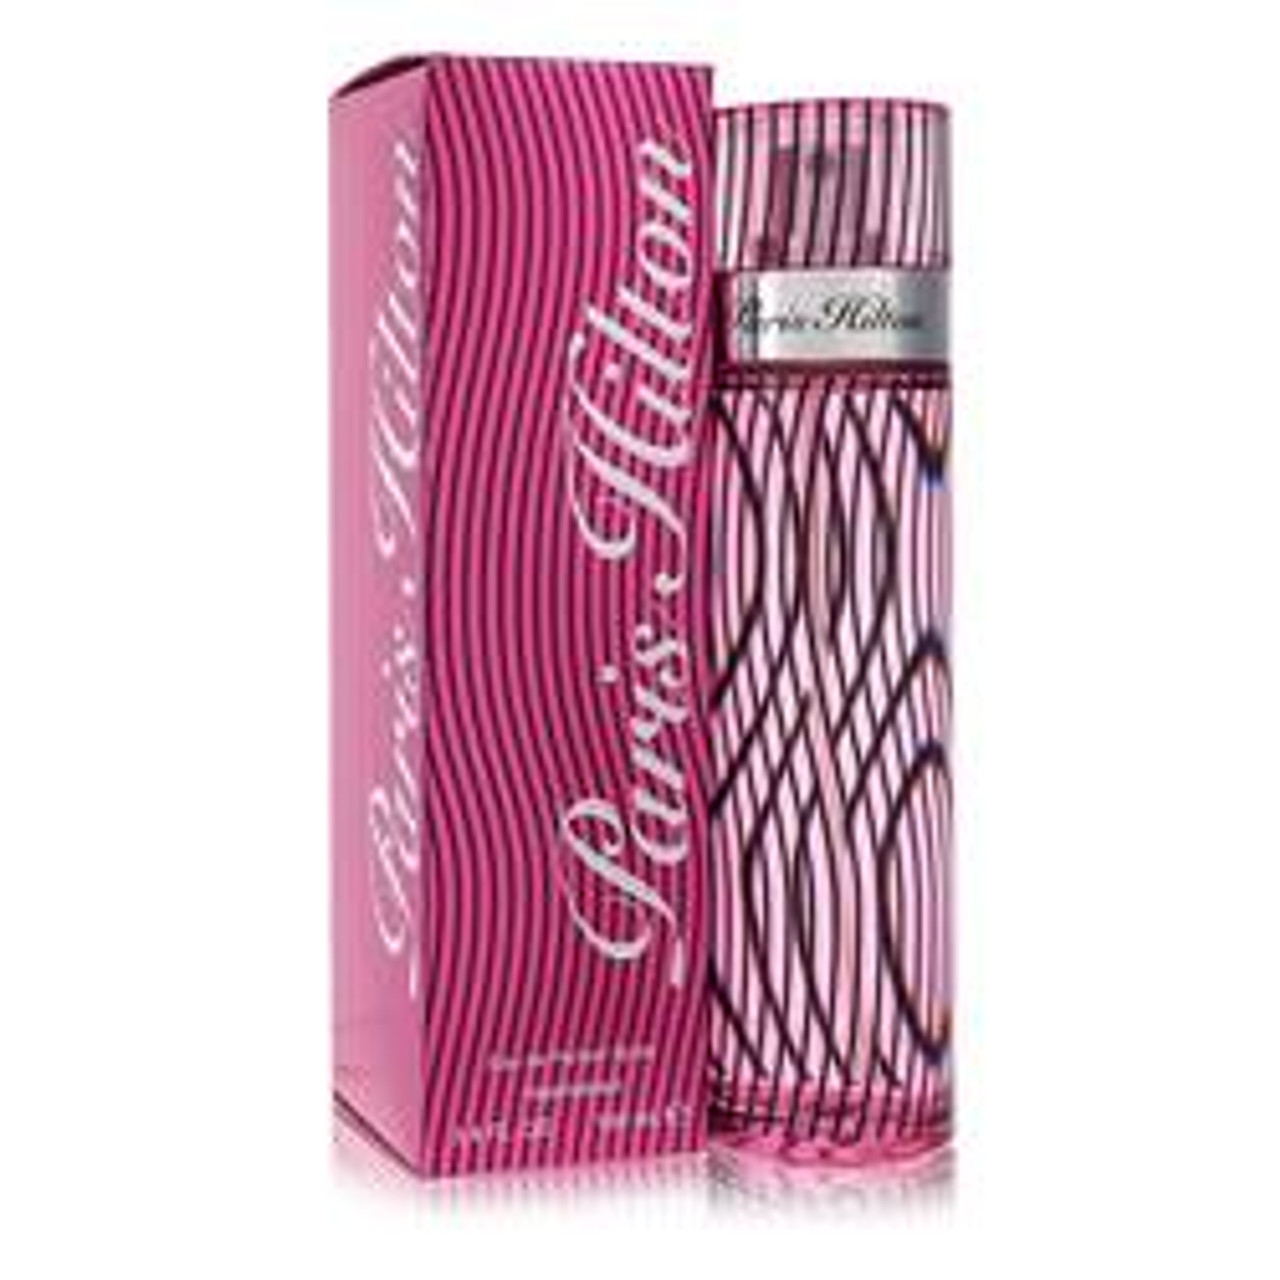 Paris Hilton Perfume By Paris Hilton Eau De Parfum Spray 3.4 oz for Women - [From 83.00 - Choose pk Qty ] - *Ships from Miami